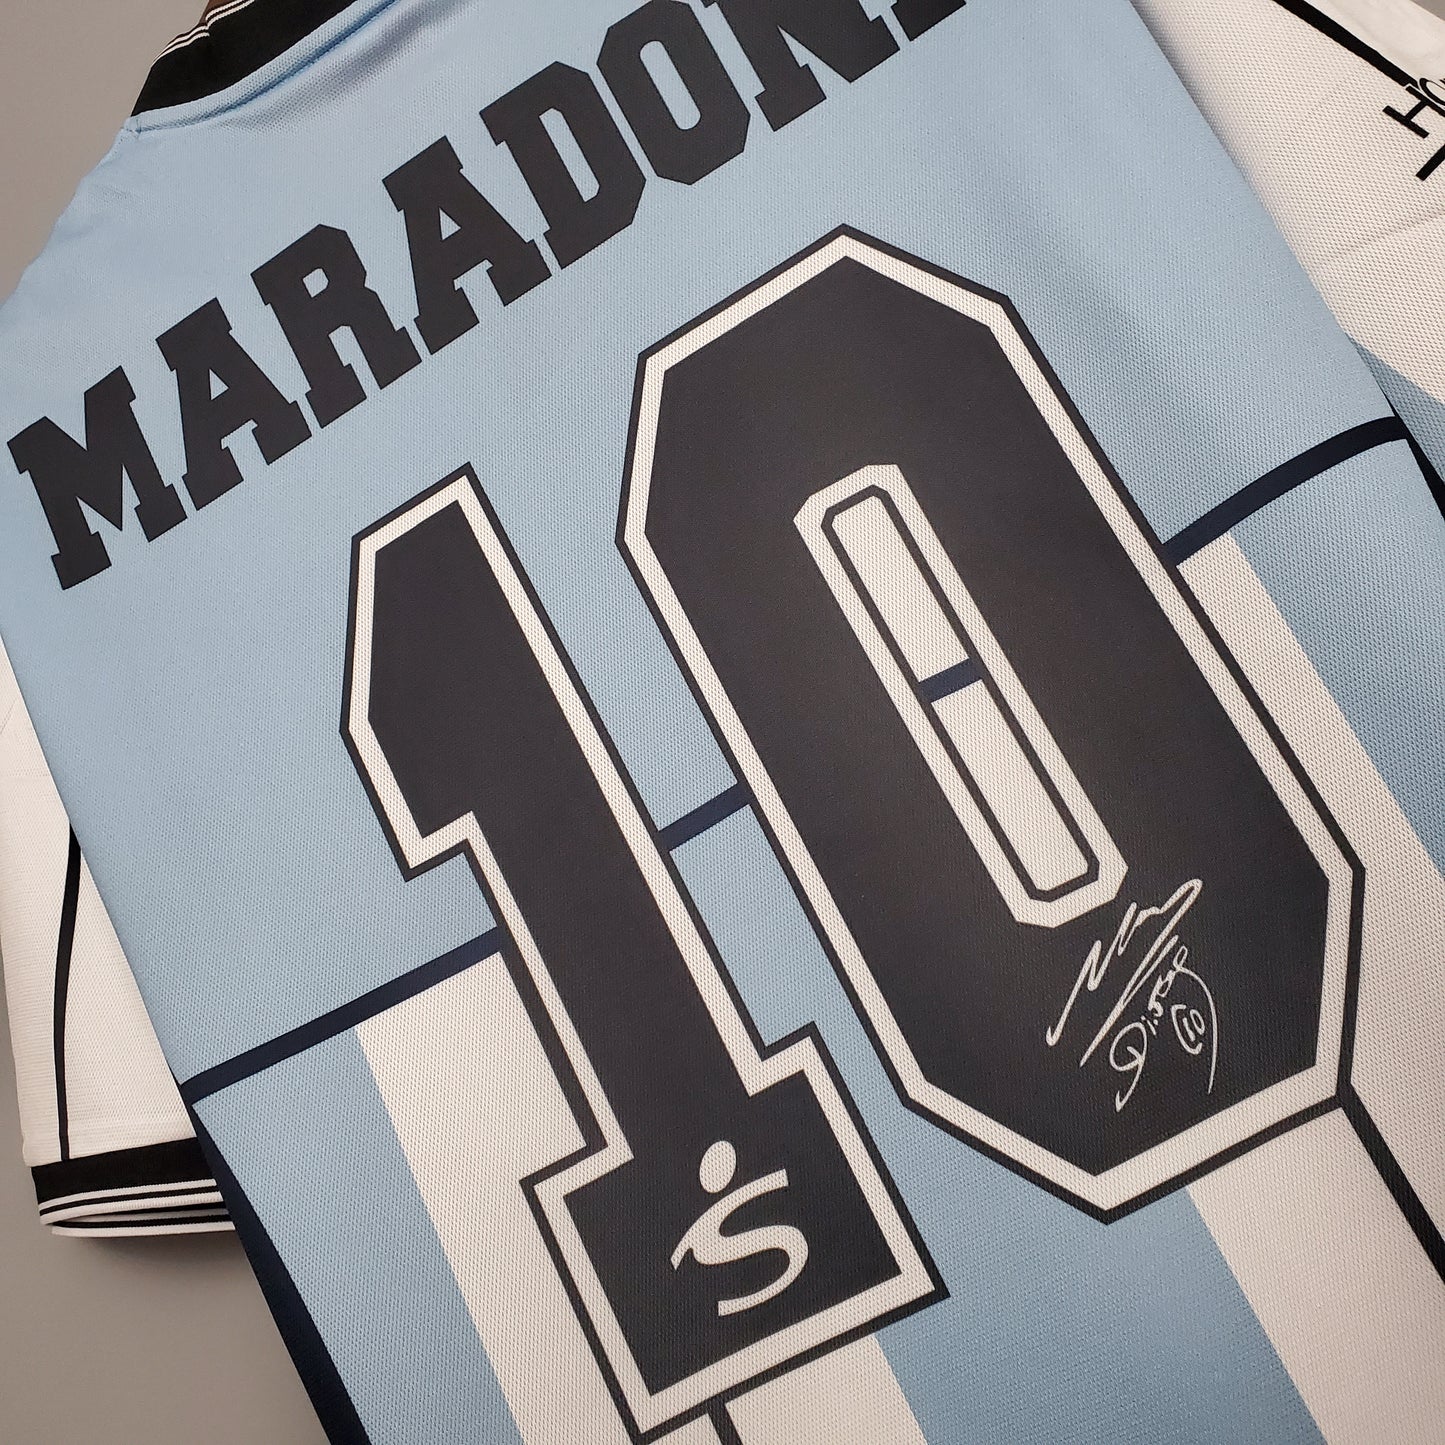 Argentina Jersey 2001 - Commemorative Edition Maradona